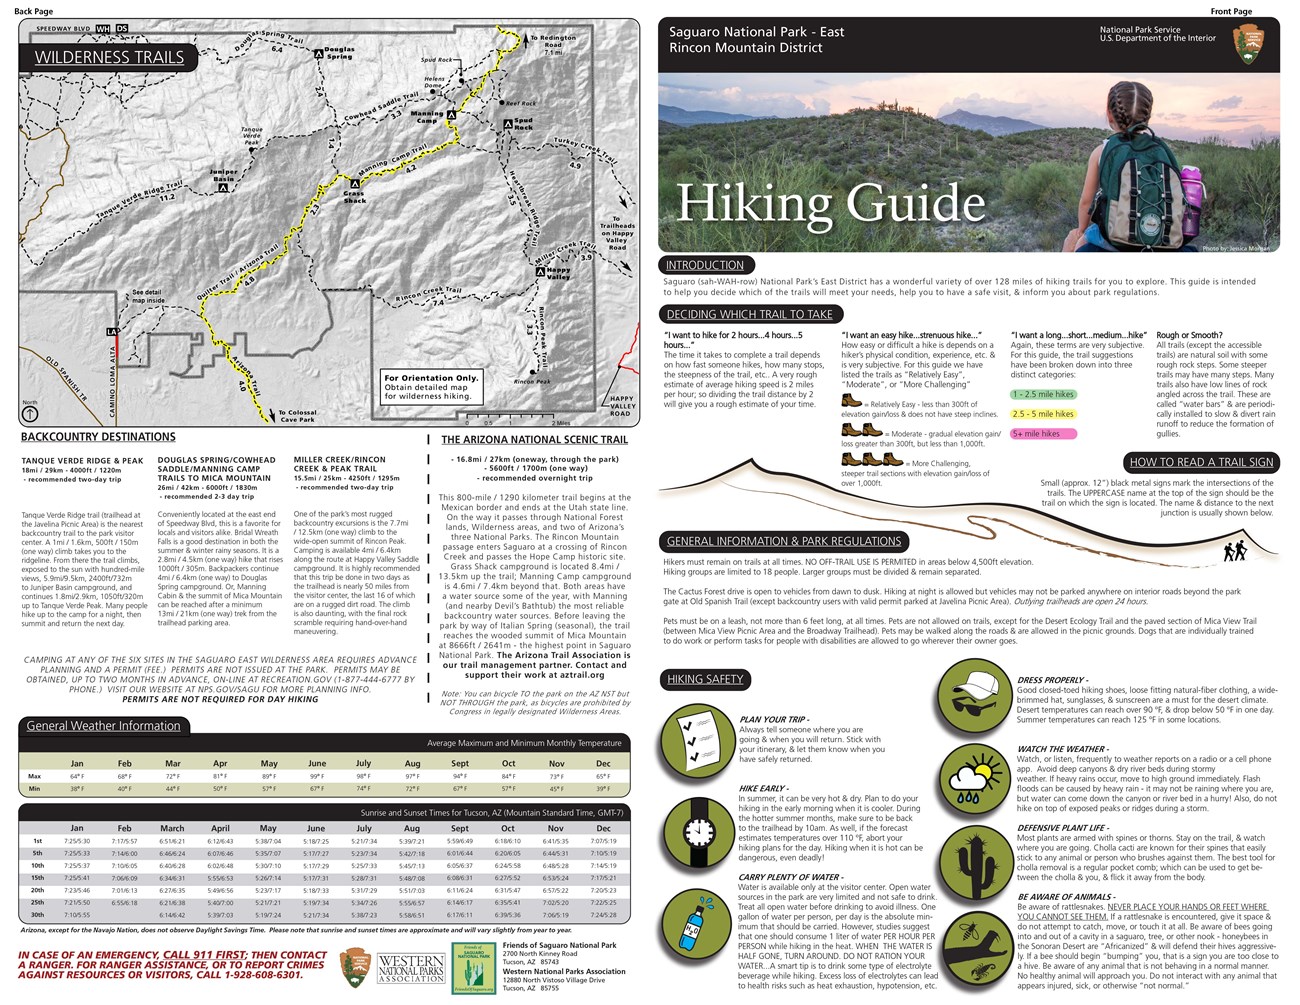 Hiking Guide, RMD